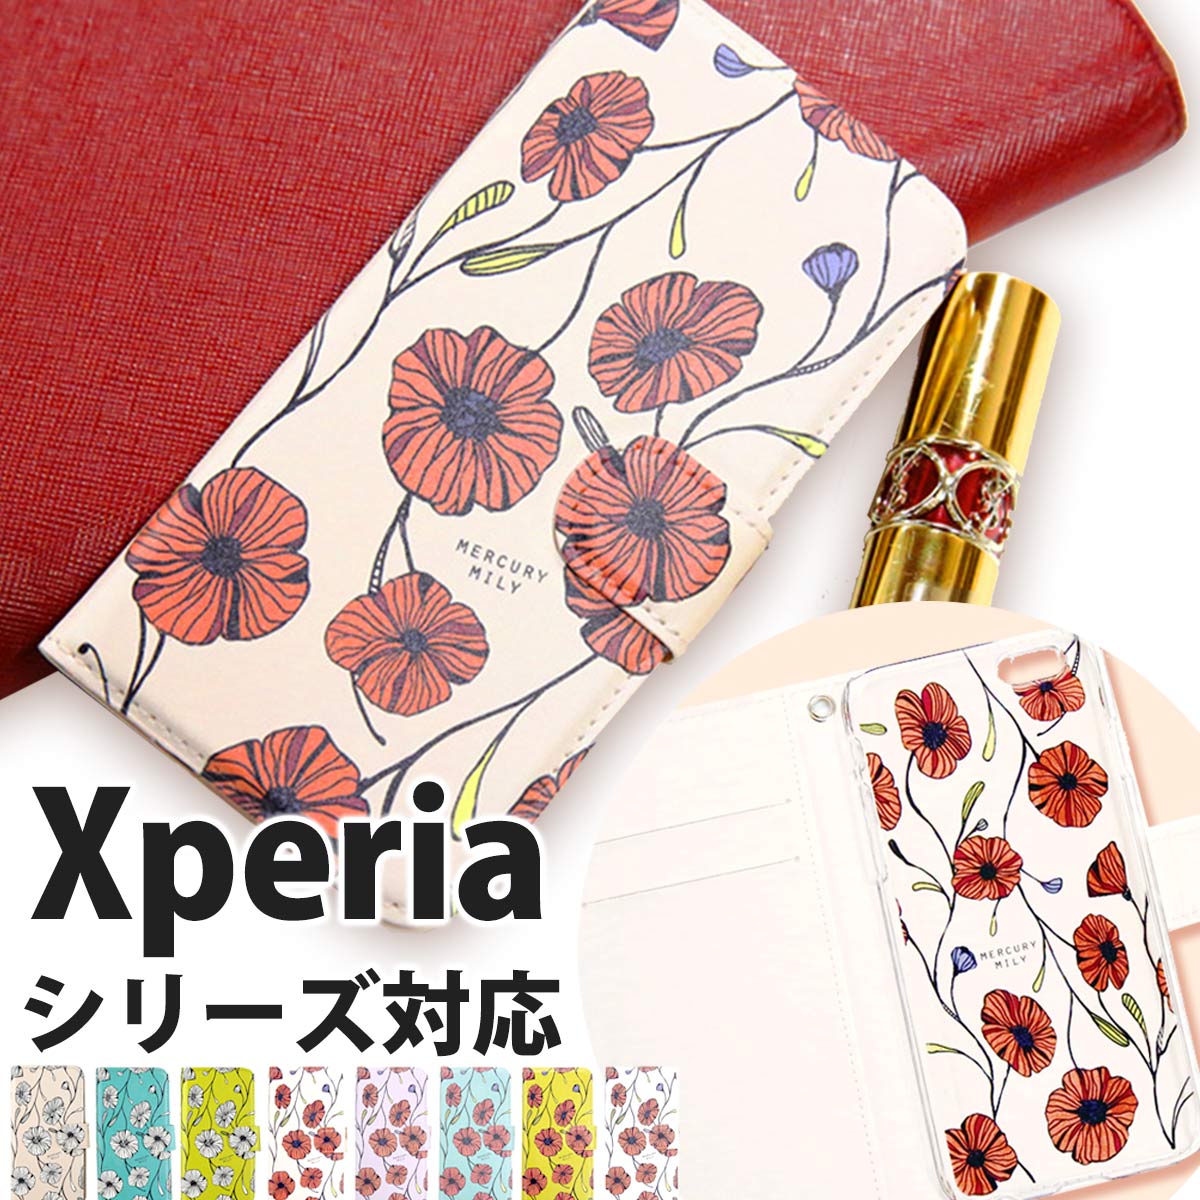 Xperia XZ 601SO 手帳 新しい 大人女子 大人可愛い 可愛い ブランド カバー ハンドメイドケース 花柄 カード収納 おしゃれ かわいい 美しい